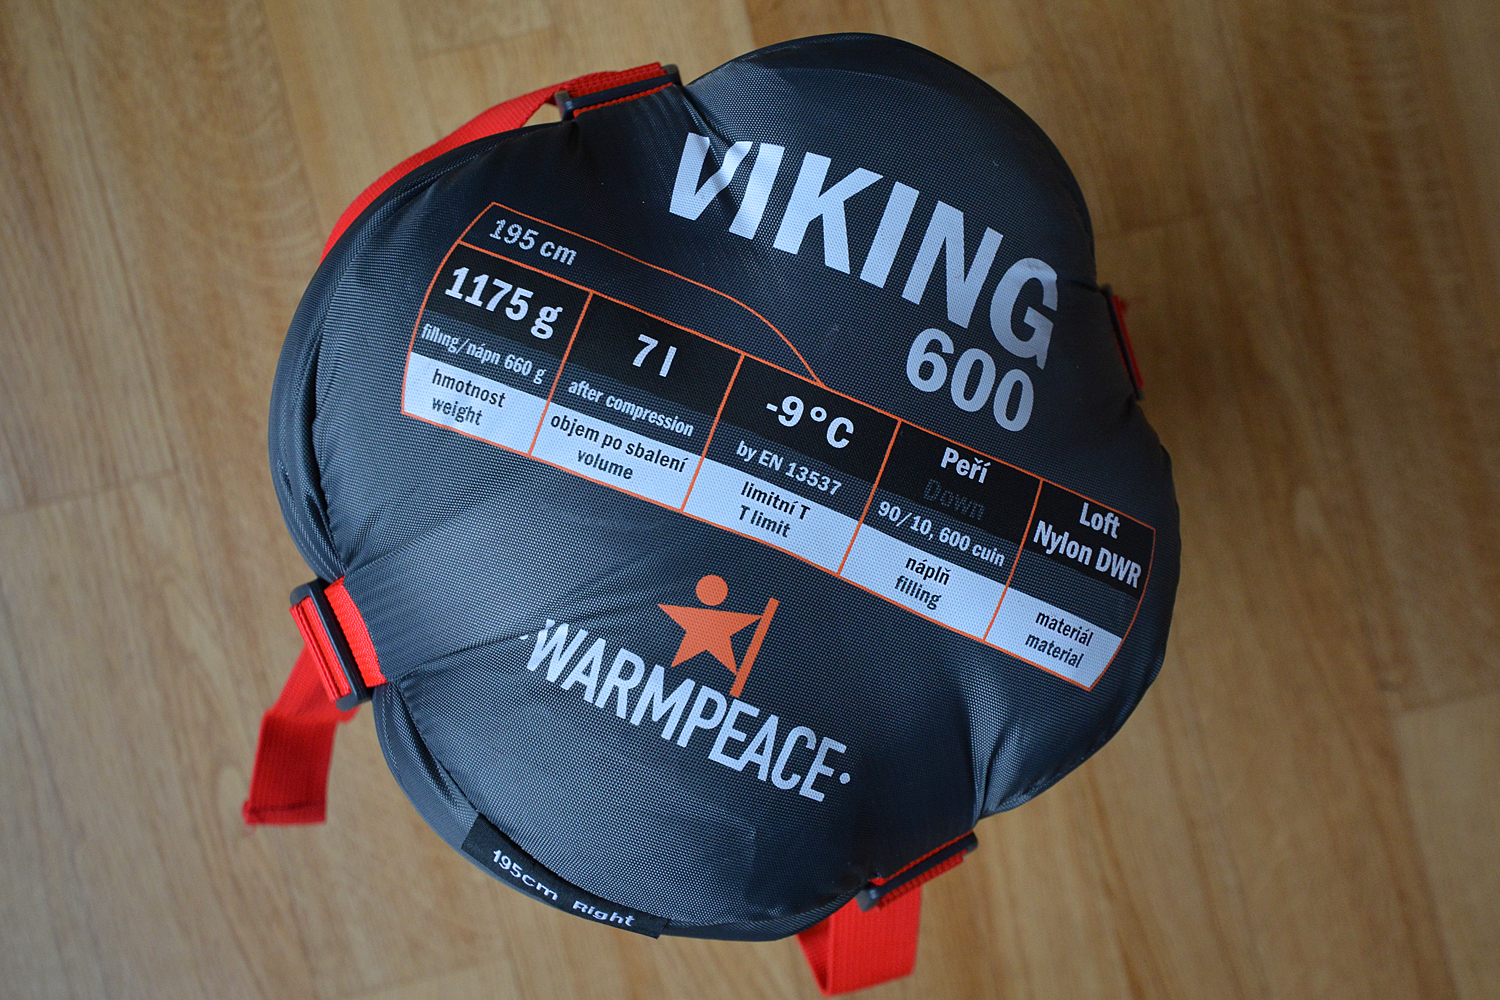 turblogg: Over netter i Warmpeace Viking 600